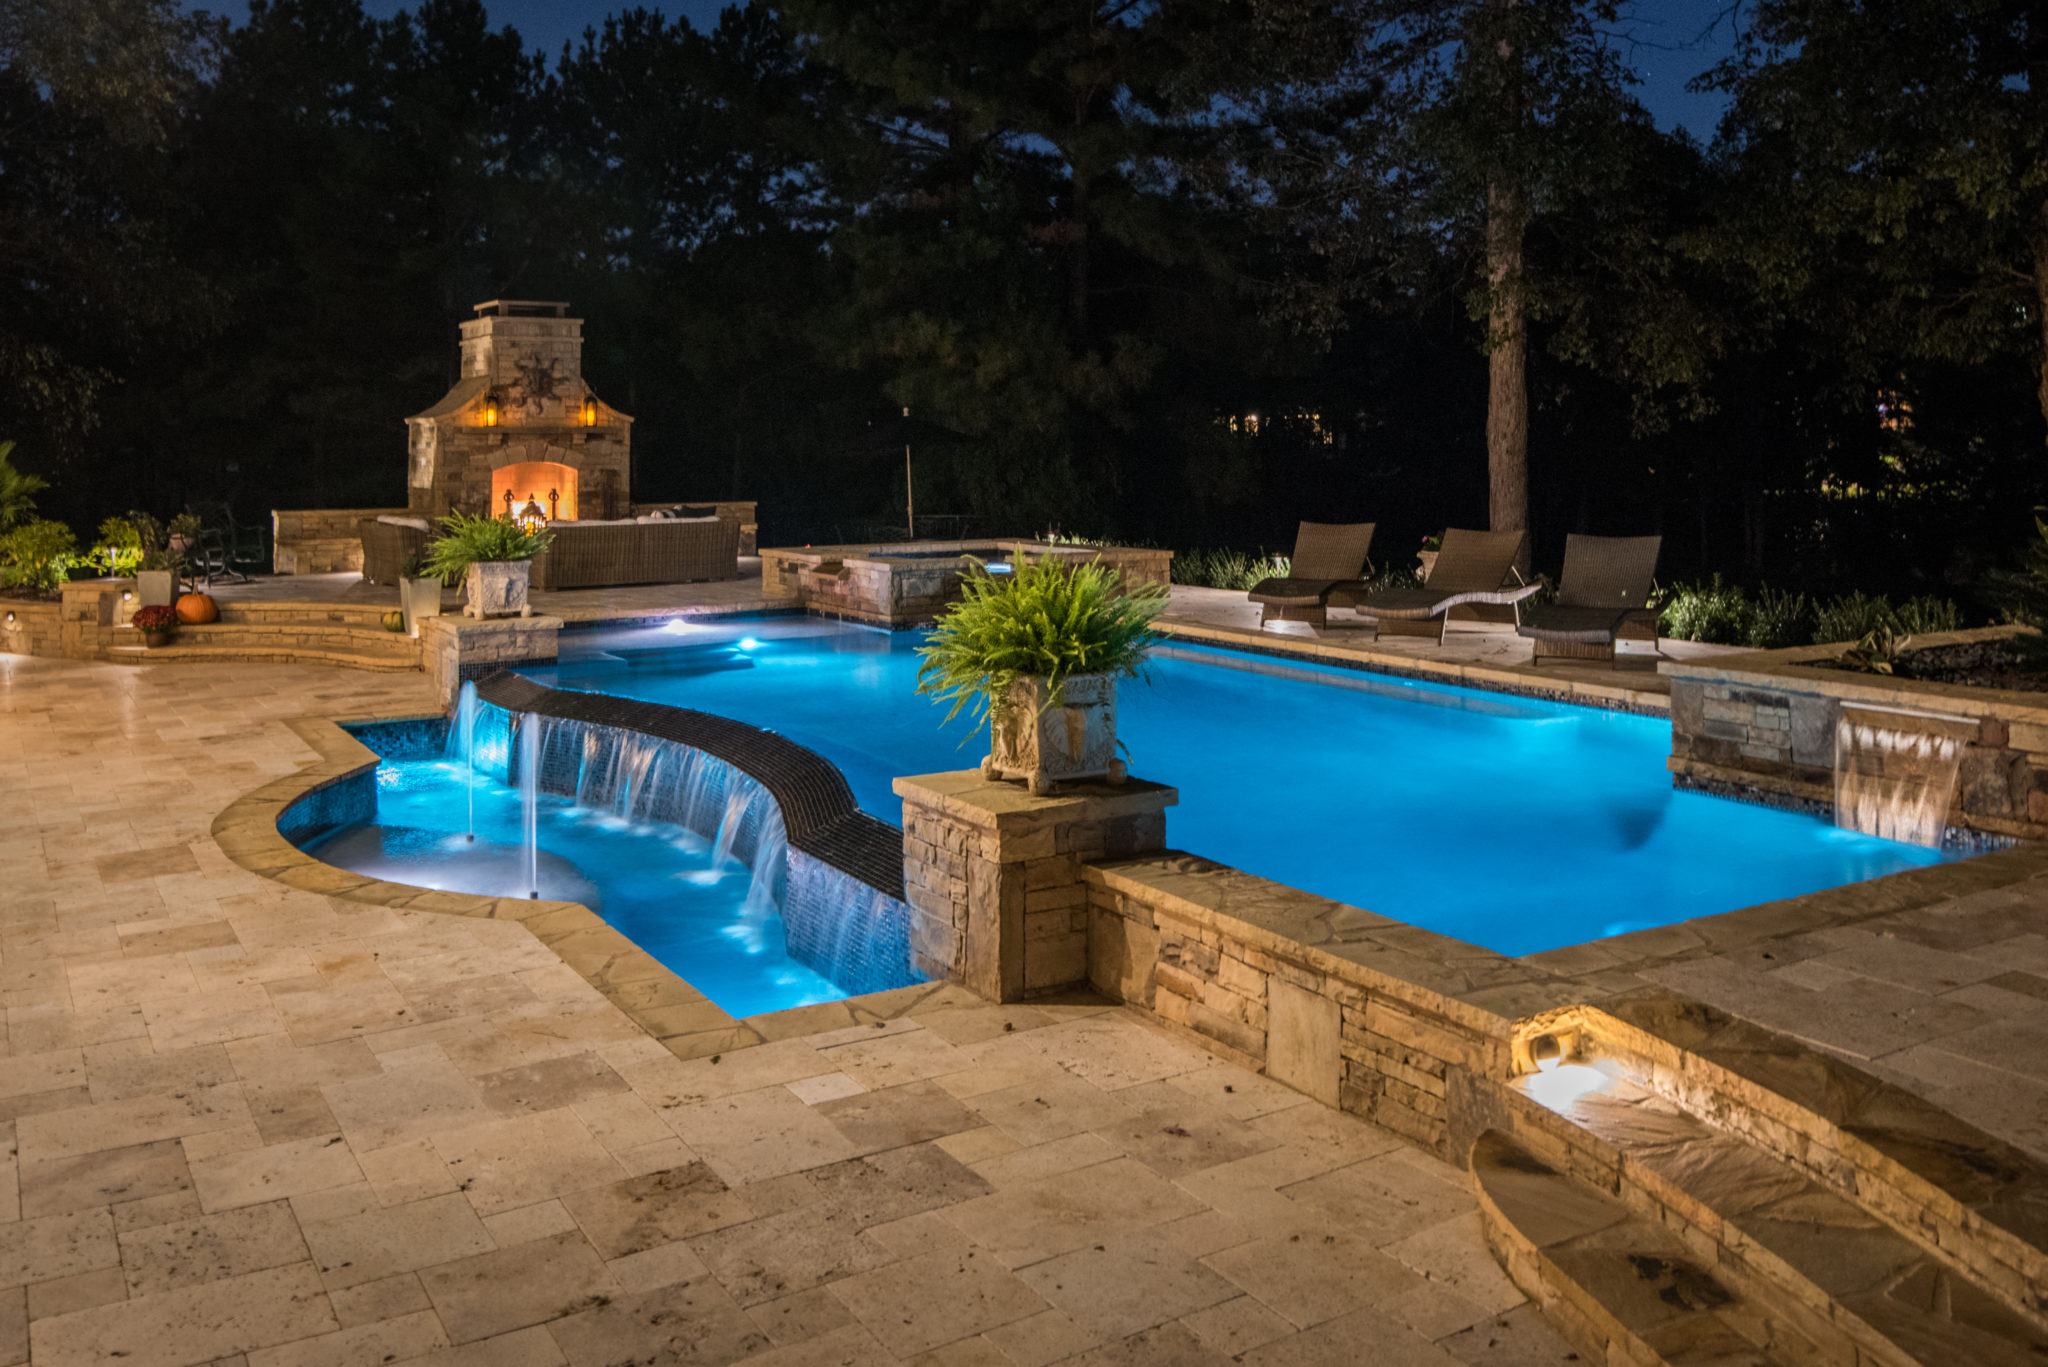 Modern vanishing edge pool with sleek design